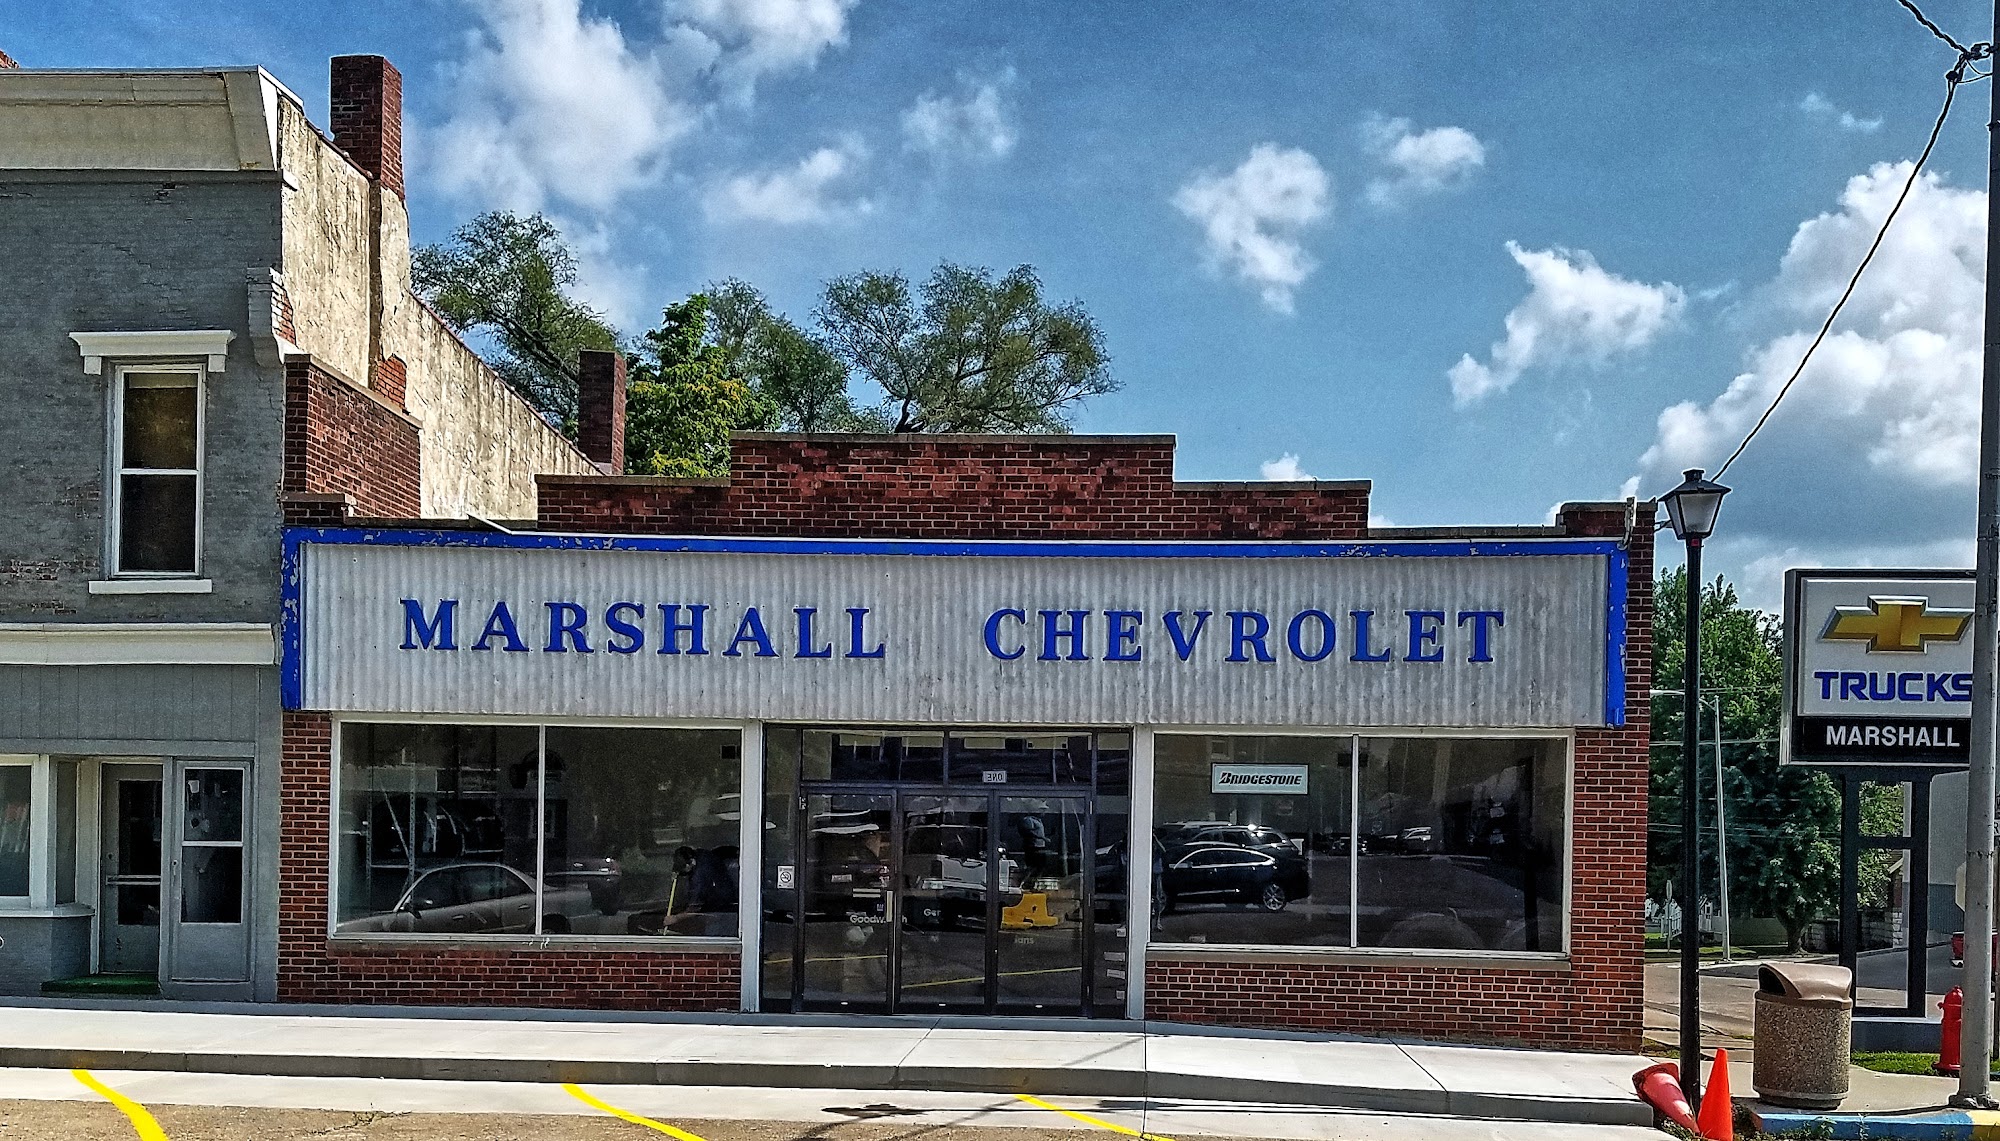 Marshall Chevrolet Co